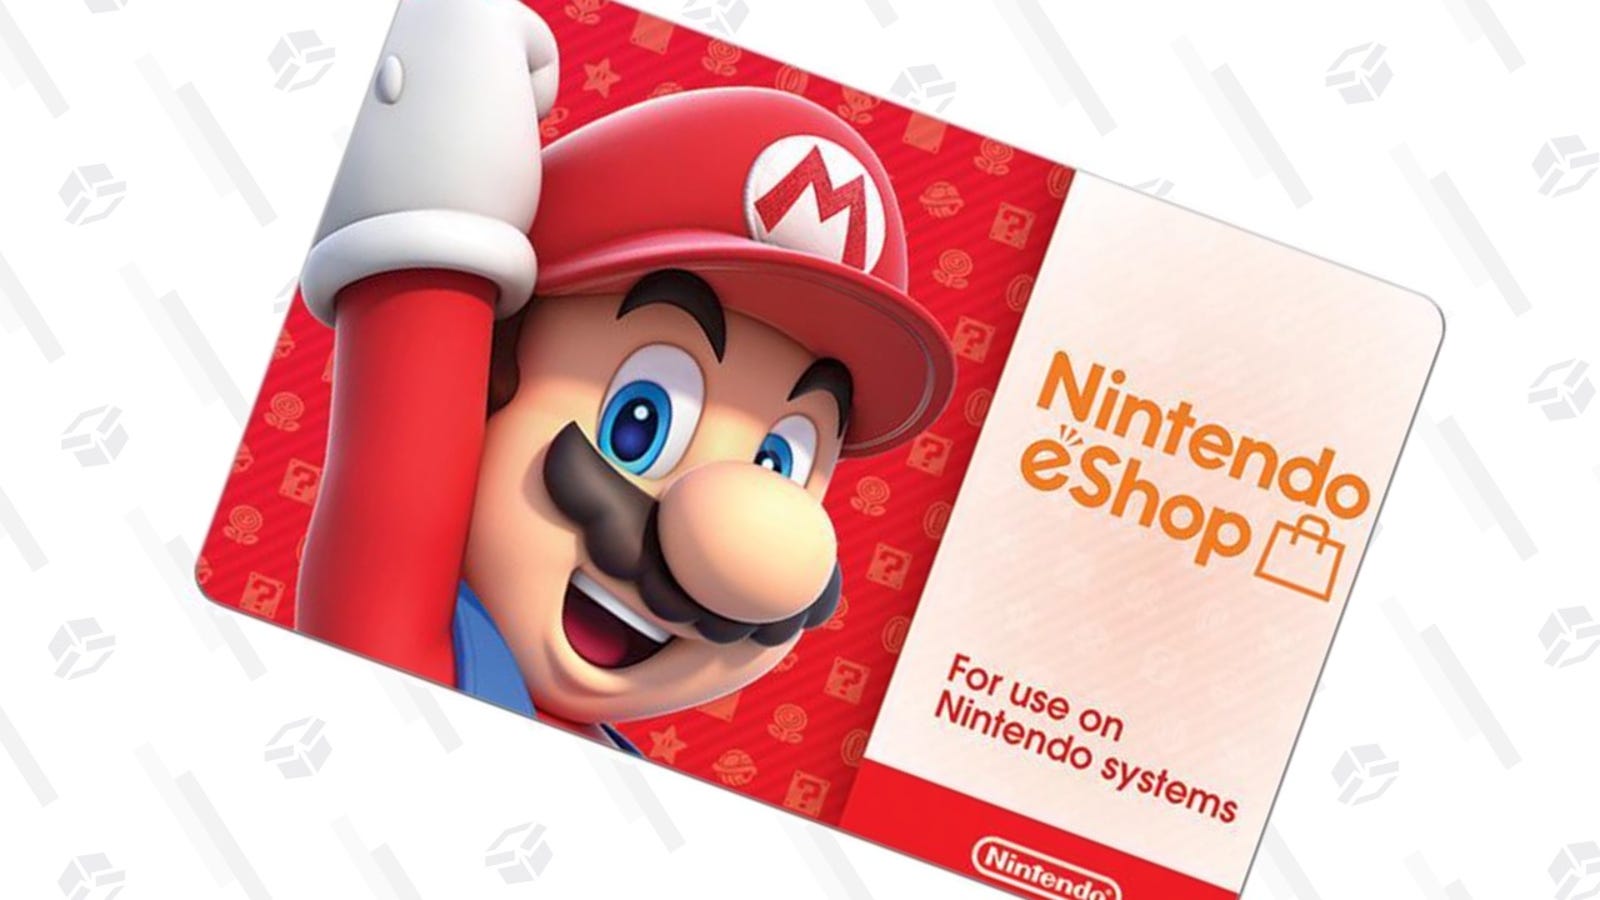 Buy a $50 Nintendo eShop Gift Card, Get a Bonus $10 For Free